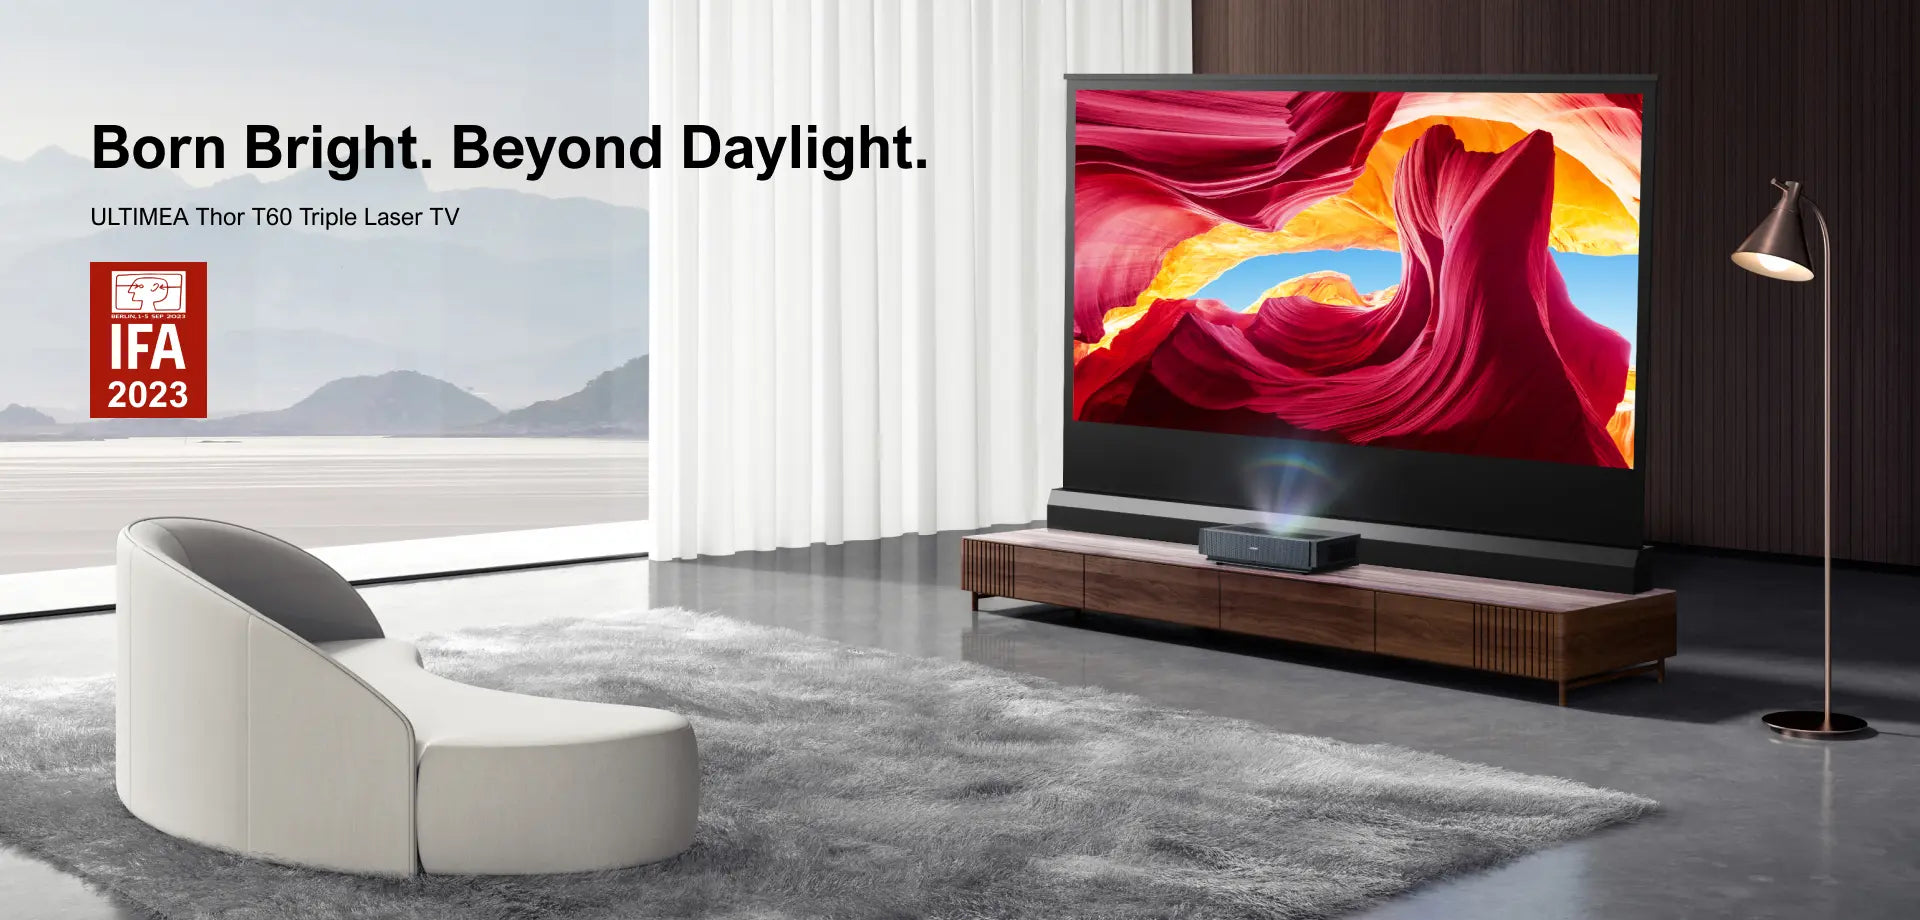 ULTIMEA Thor T60 Triple Laser TV:Born Bright,Beyond Daylight by